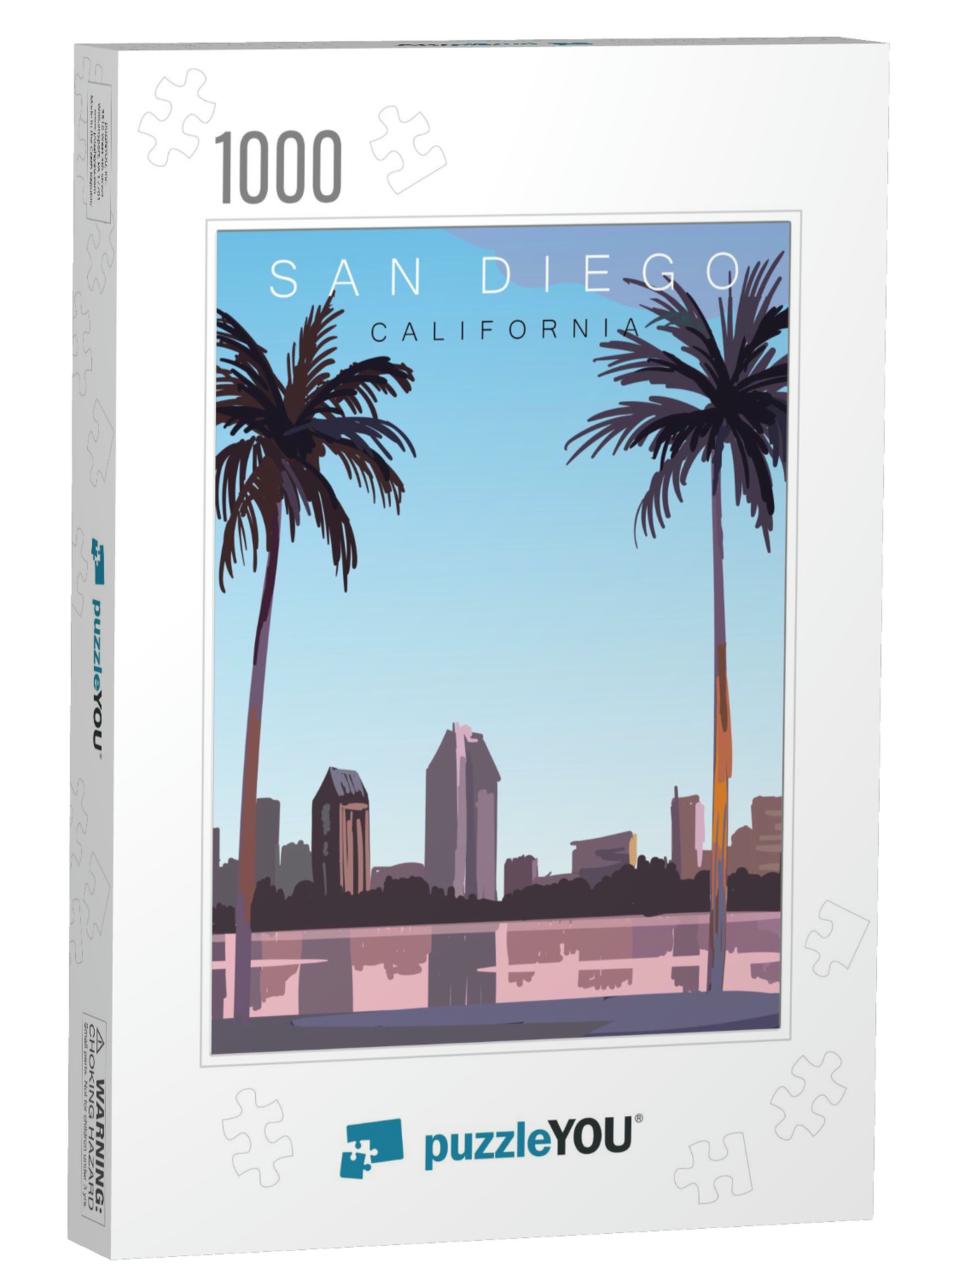 San Diego Modern Vector Illustration. San Diego Californi... Jigsaw Puzzle with 1000 pieces